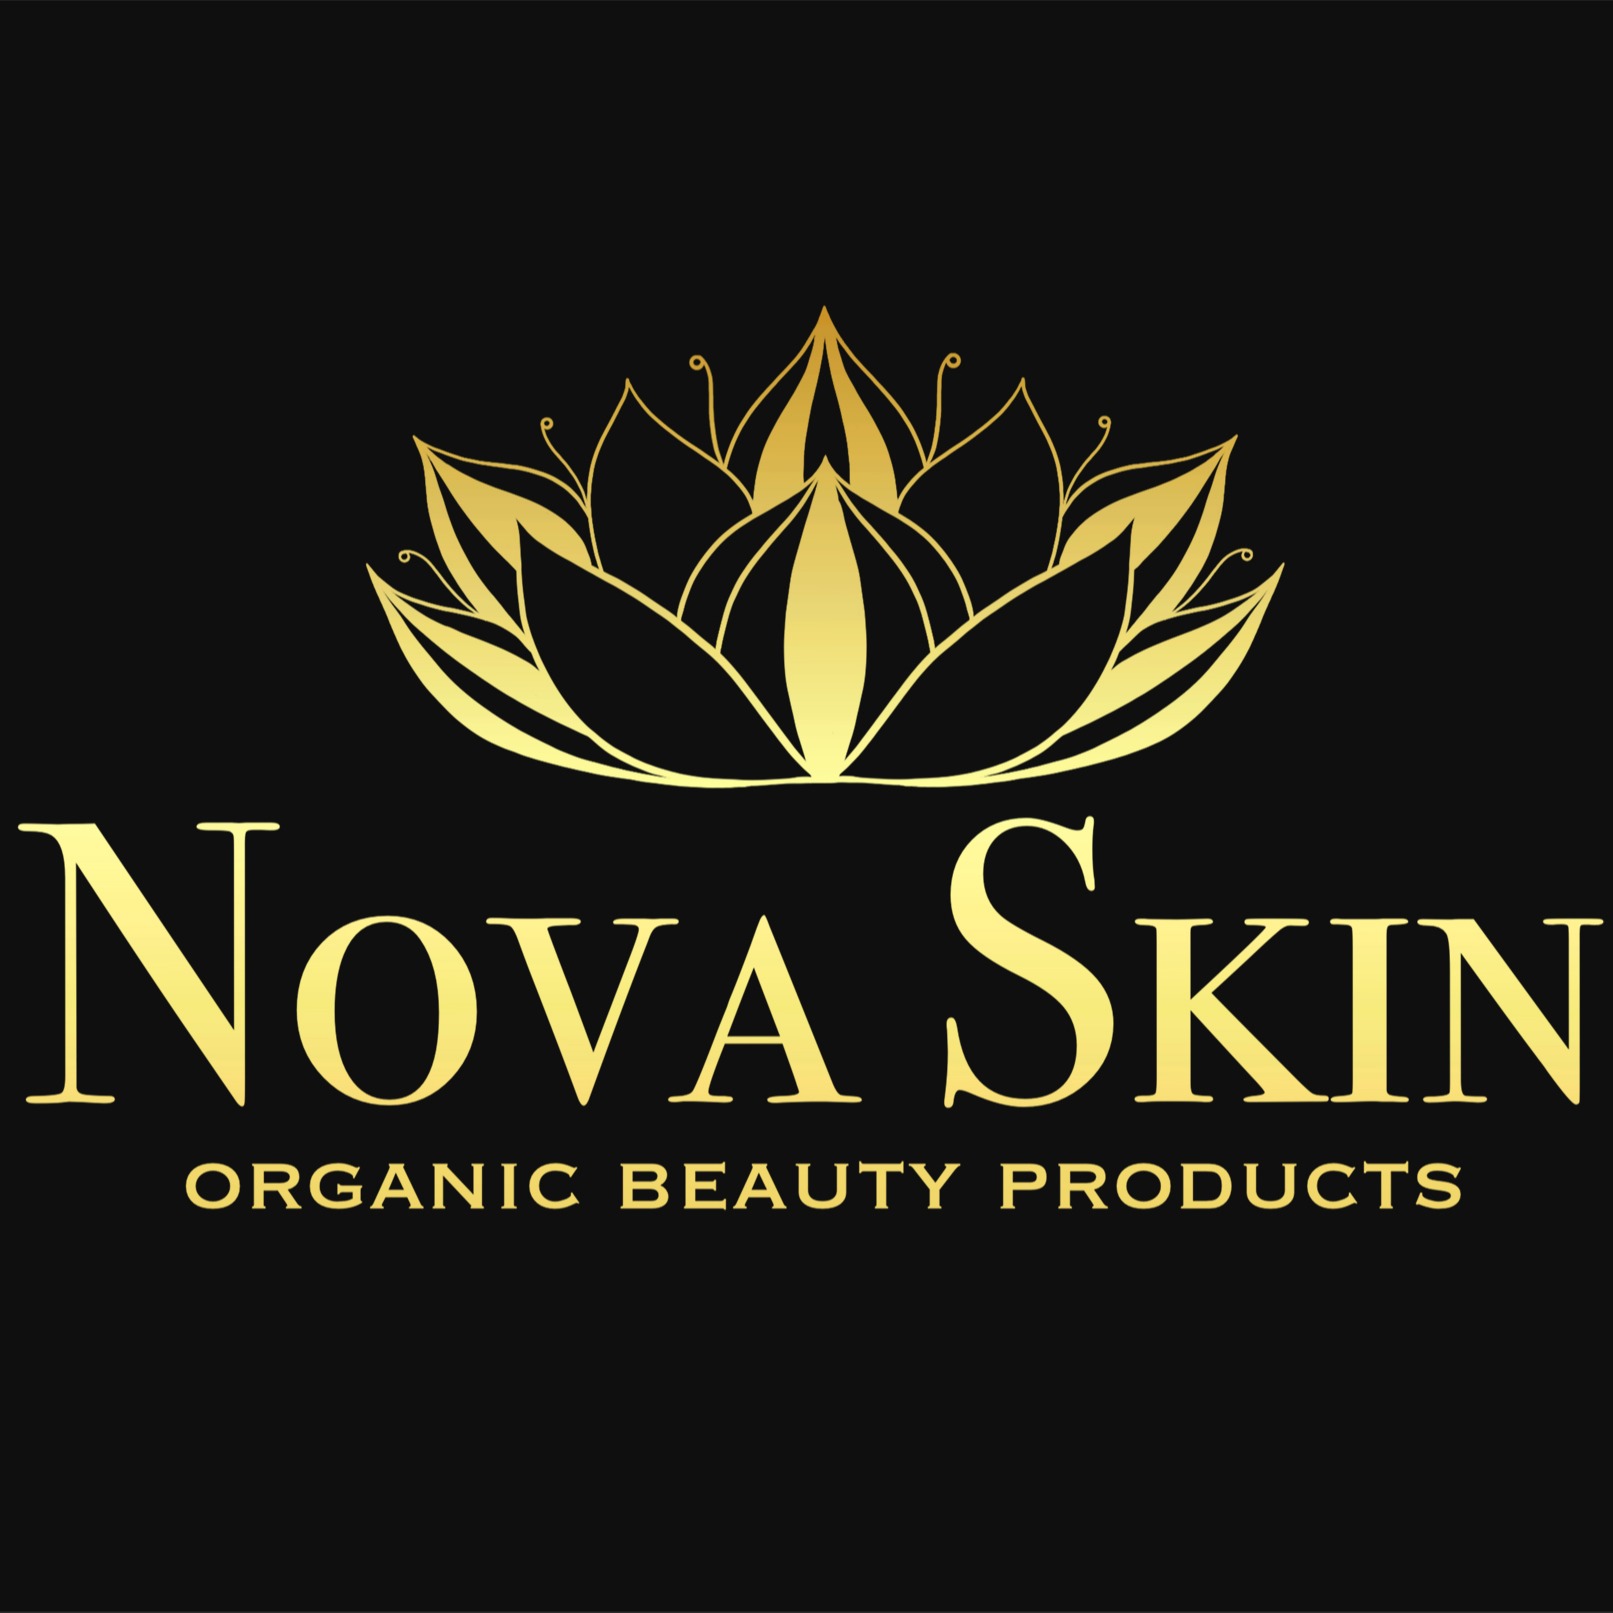 Nova Skin beauty products